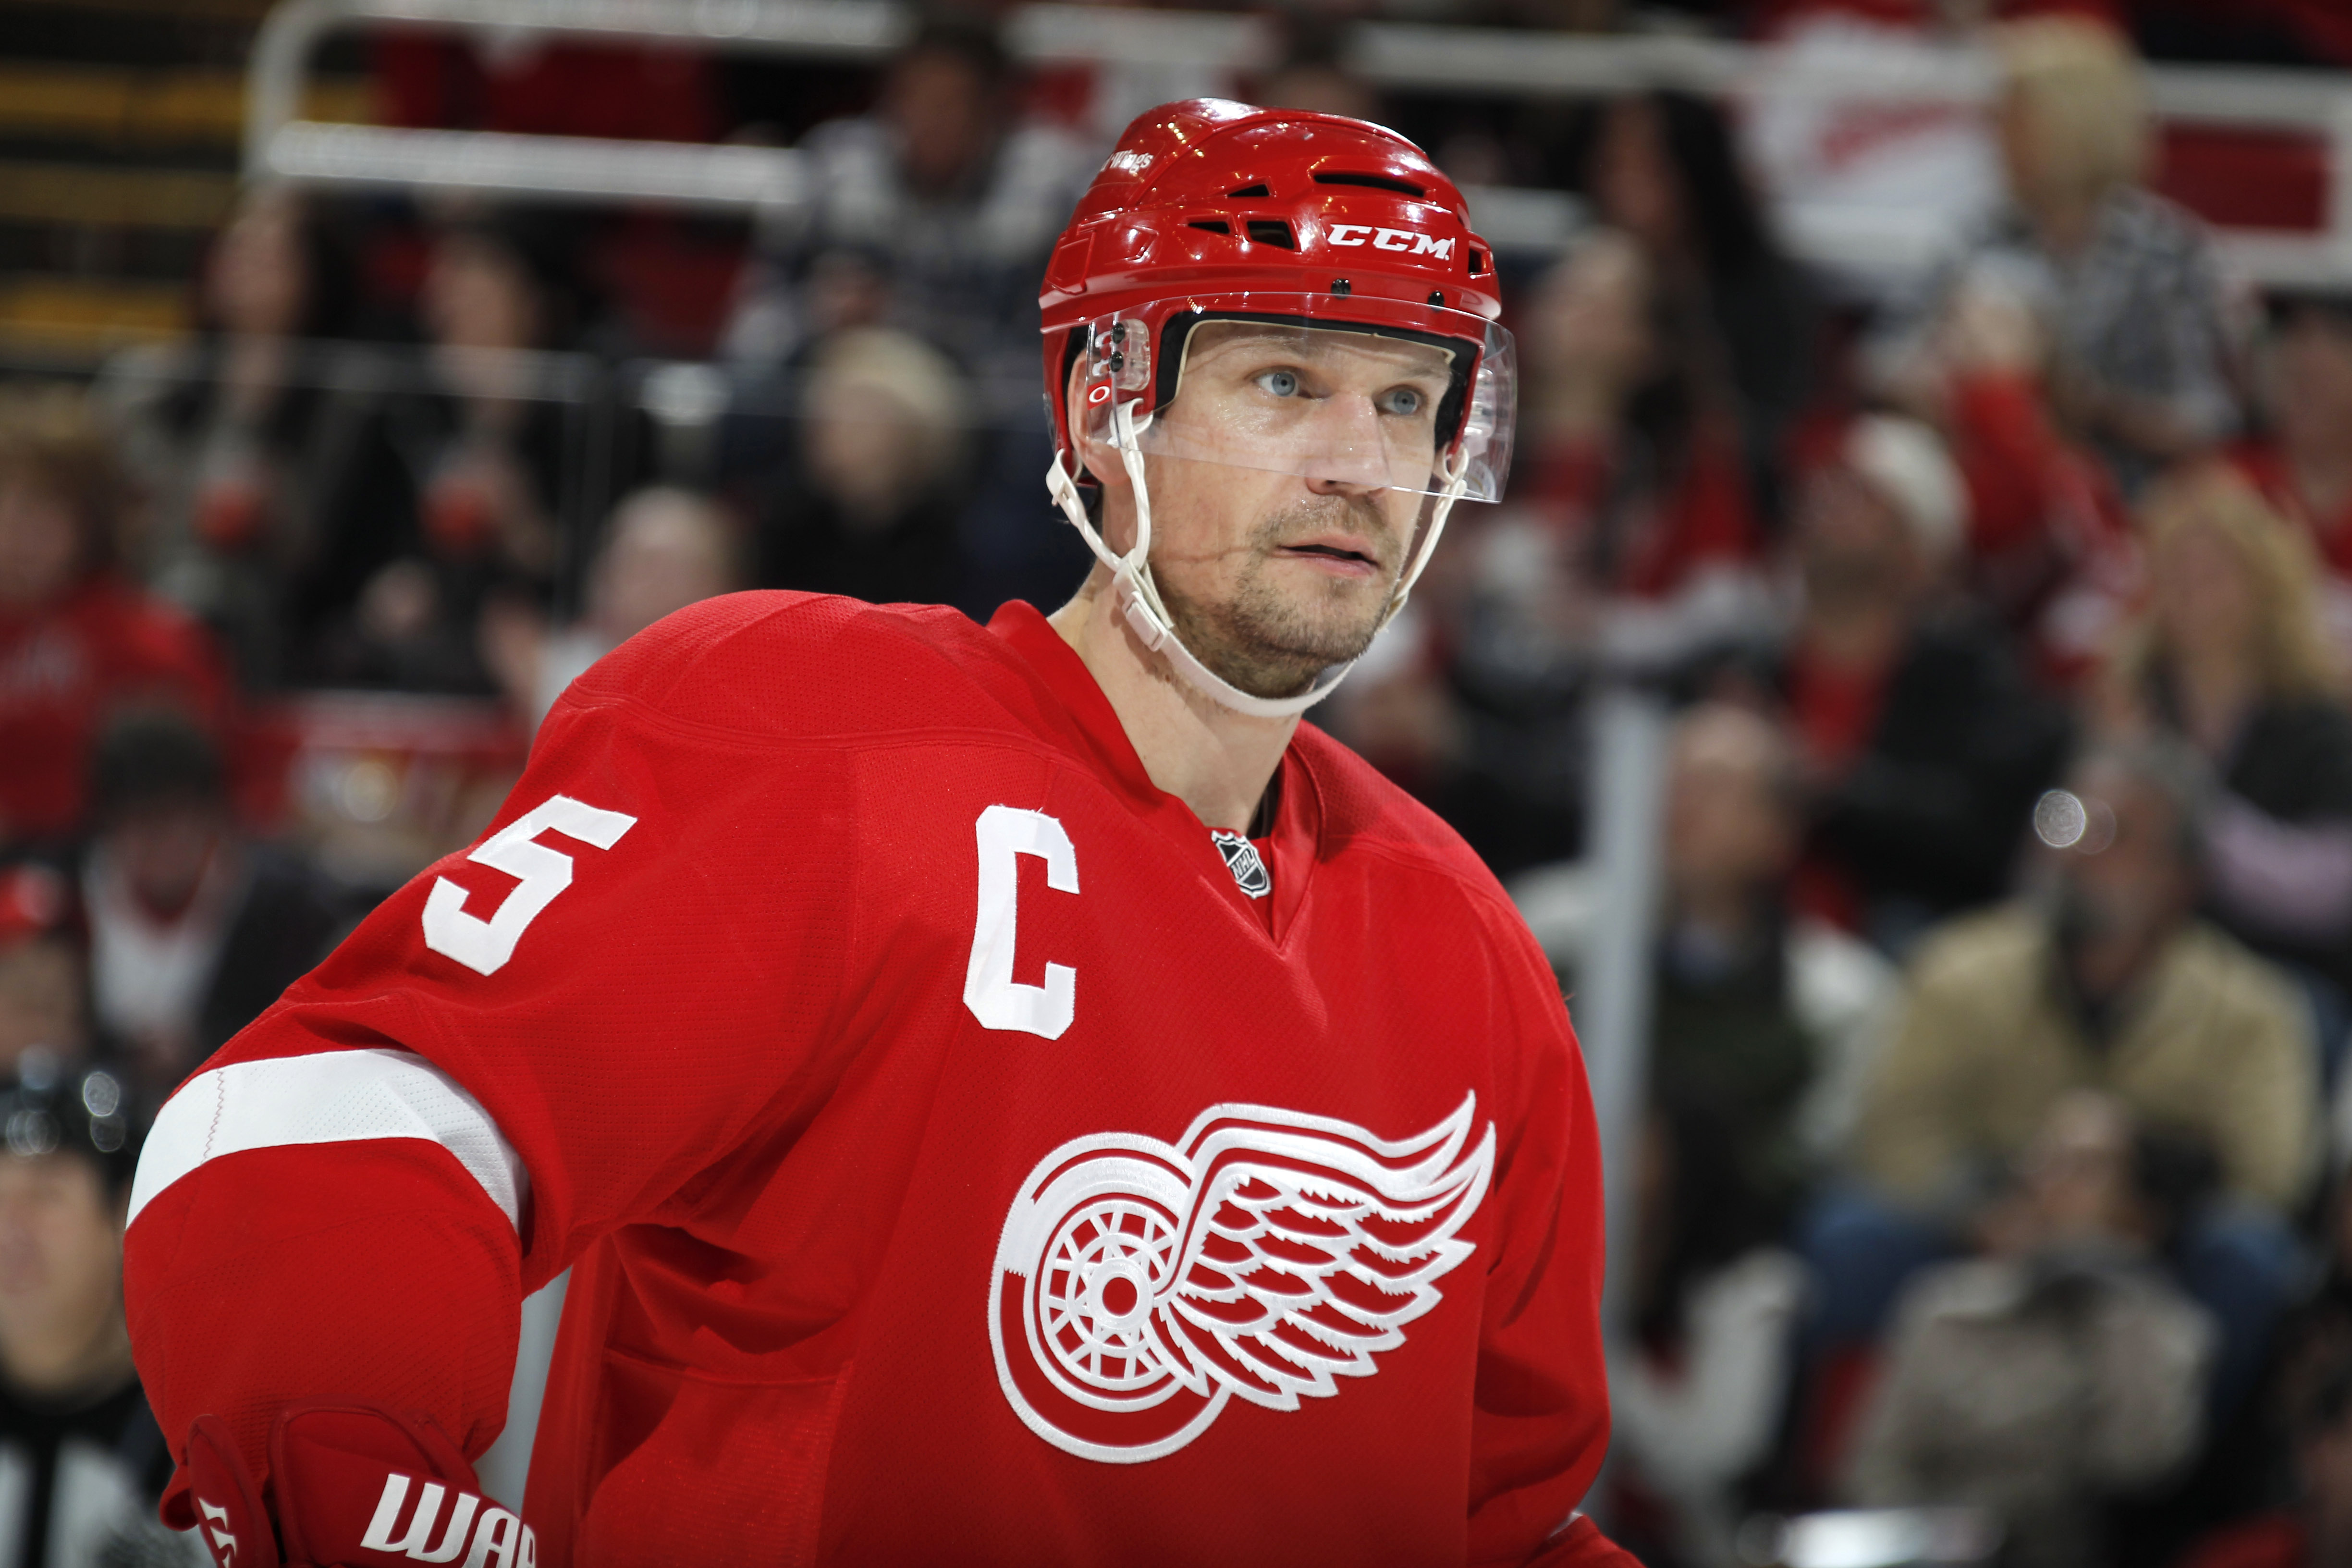  2021-22 SP #13 Jakub Vrana Detroit Red Wings NHL